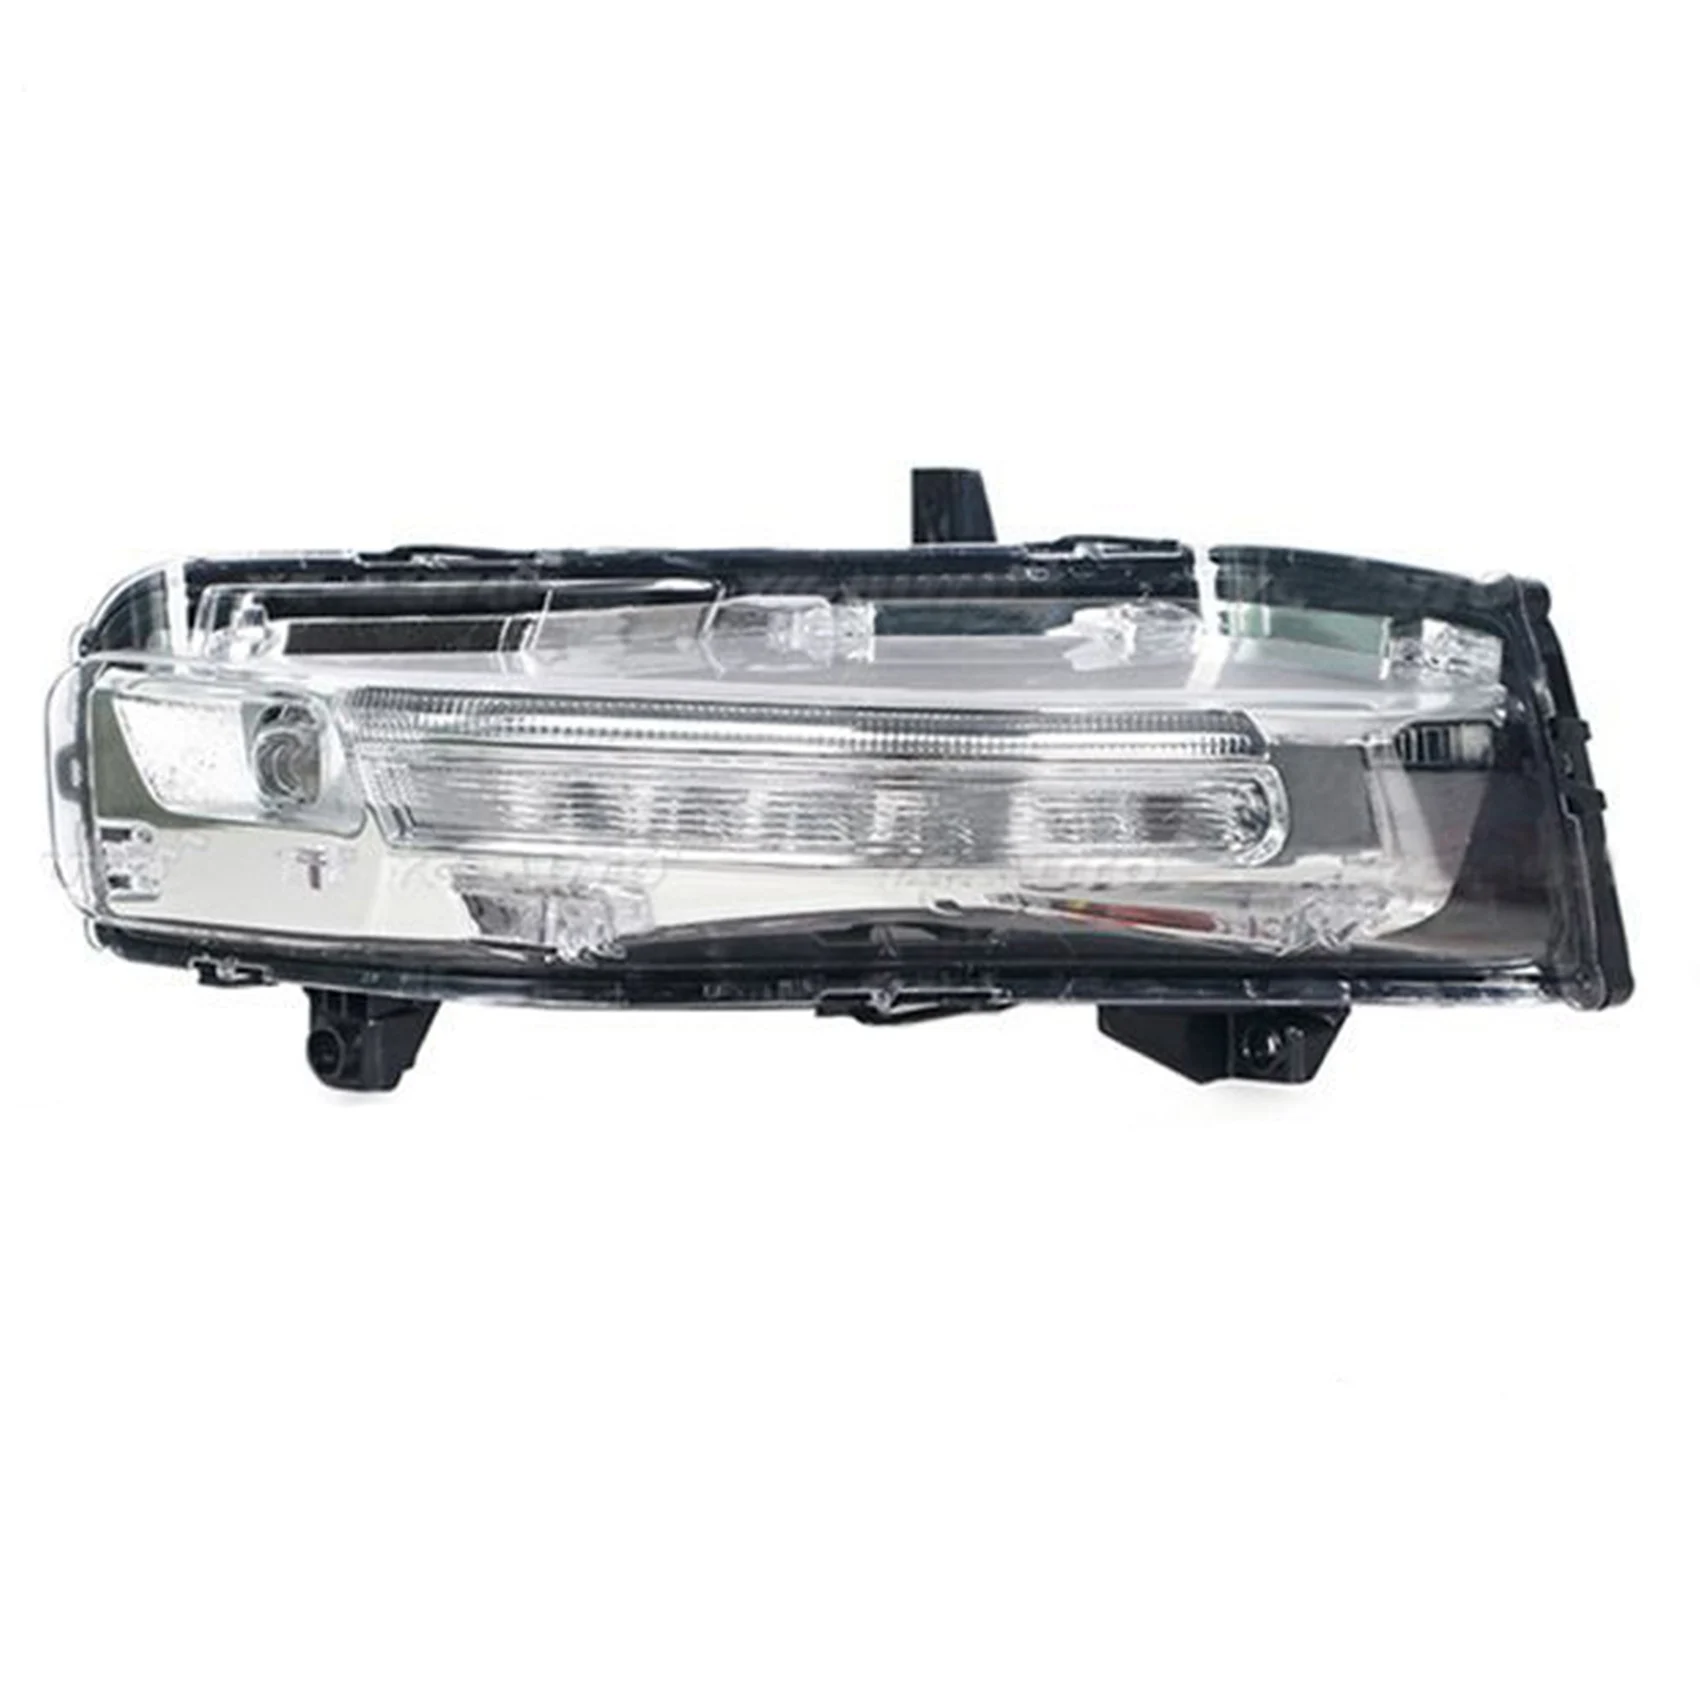 

For Ford Mustang 2018-2020 Right Front Bumper LED Daytime Running Light Foglamp Driving Foglight DRL Light Assembly